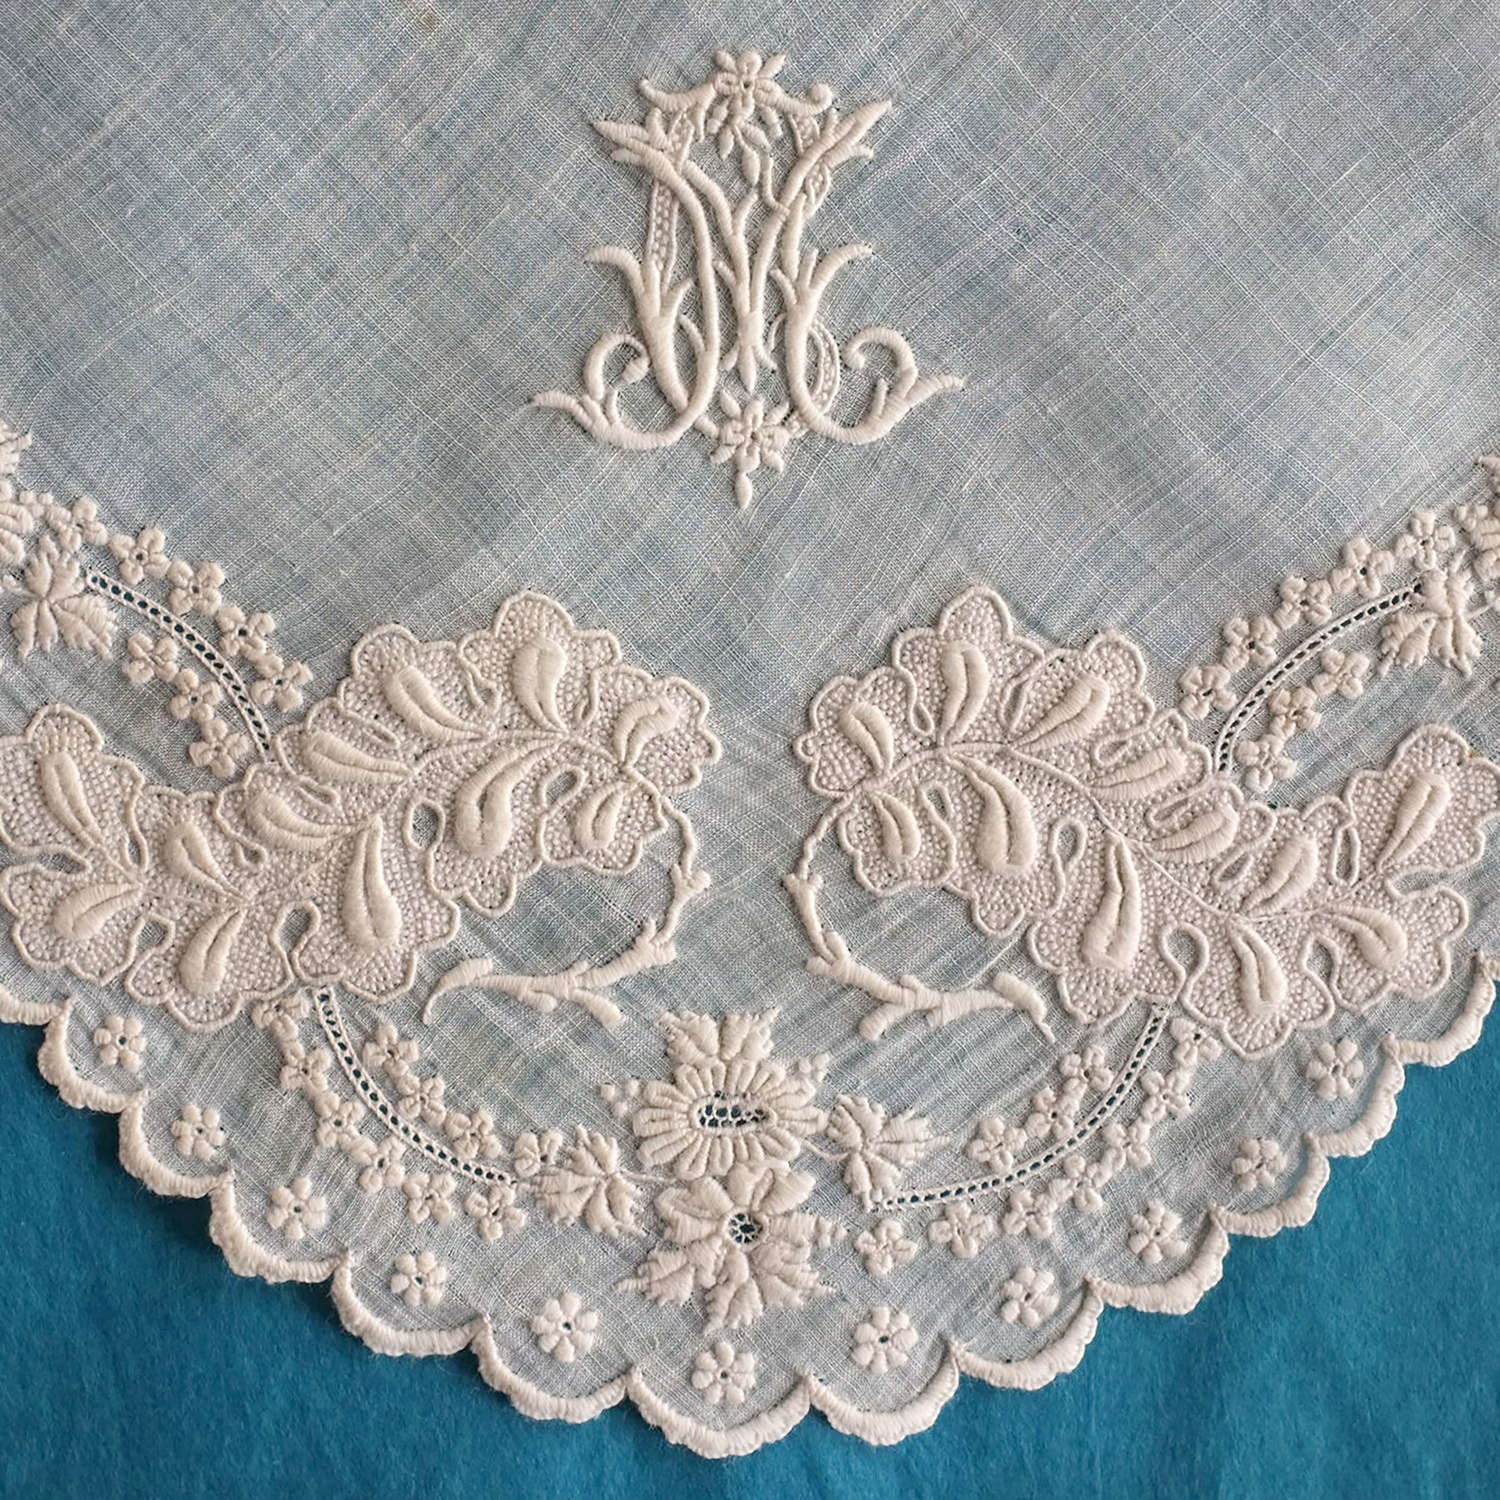 Antique Whitework Embroidered Handkerchief with Monogram